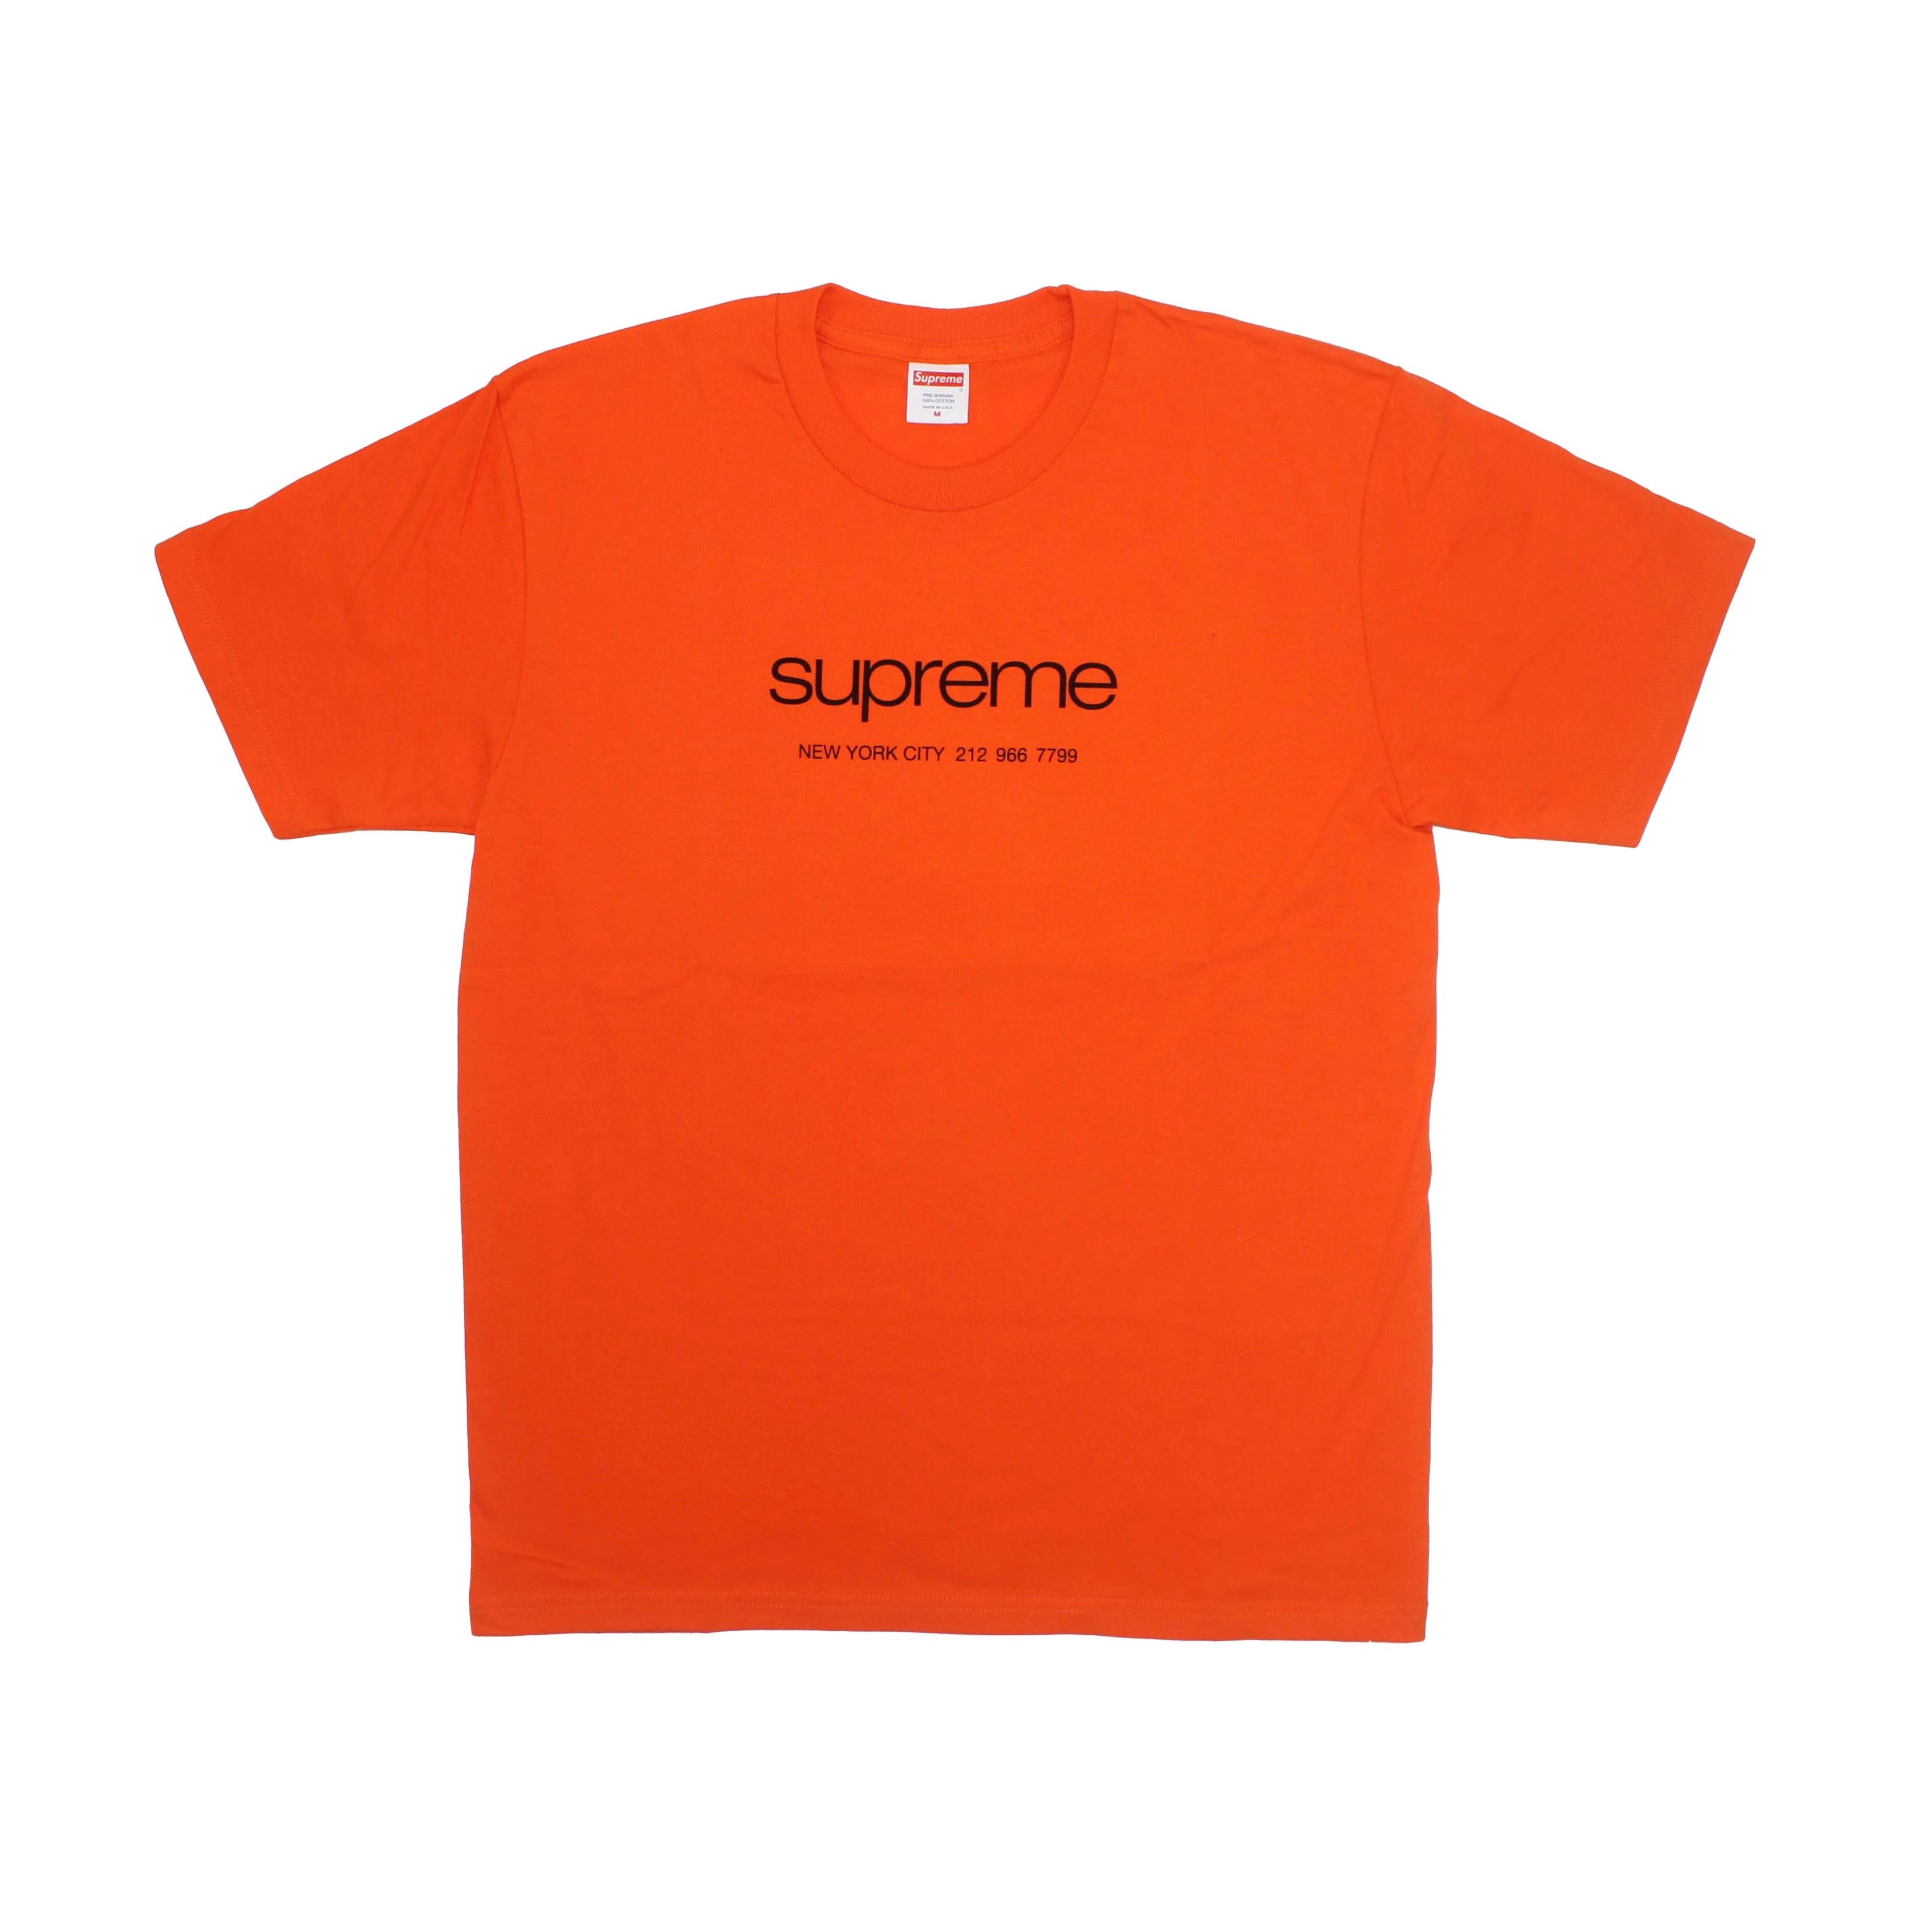 Supreme Shop T-Shirt